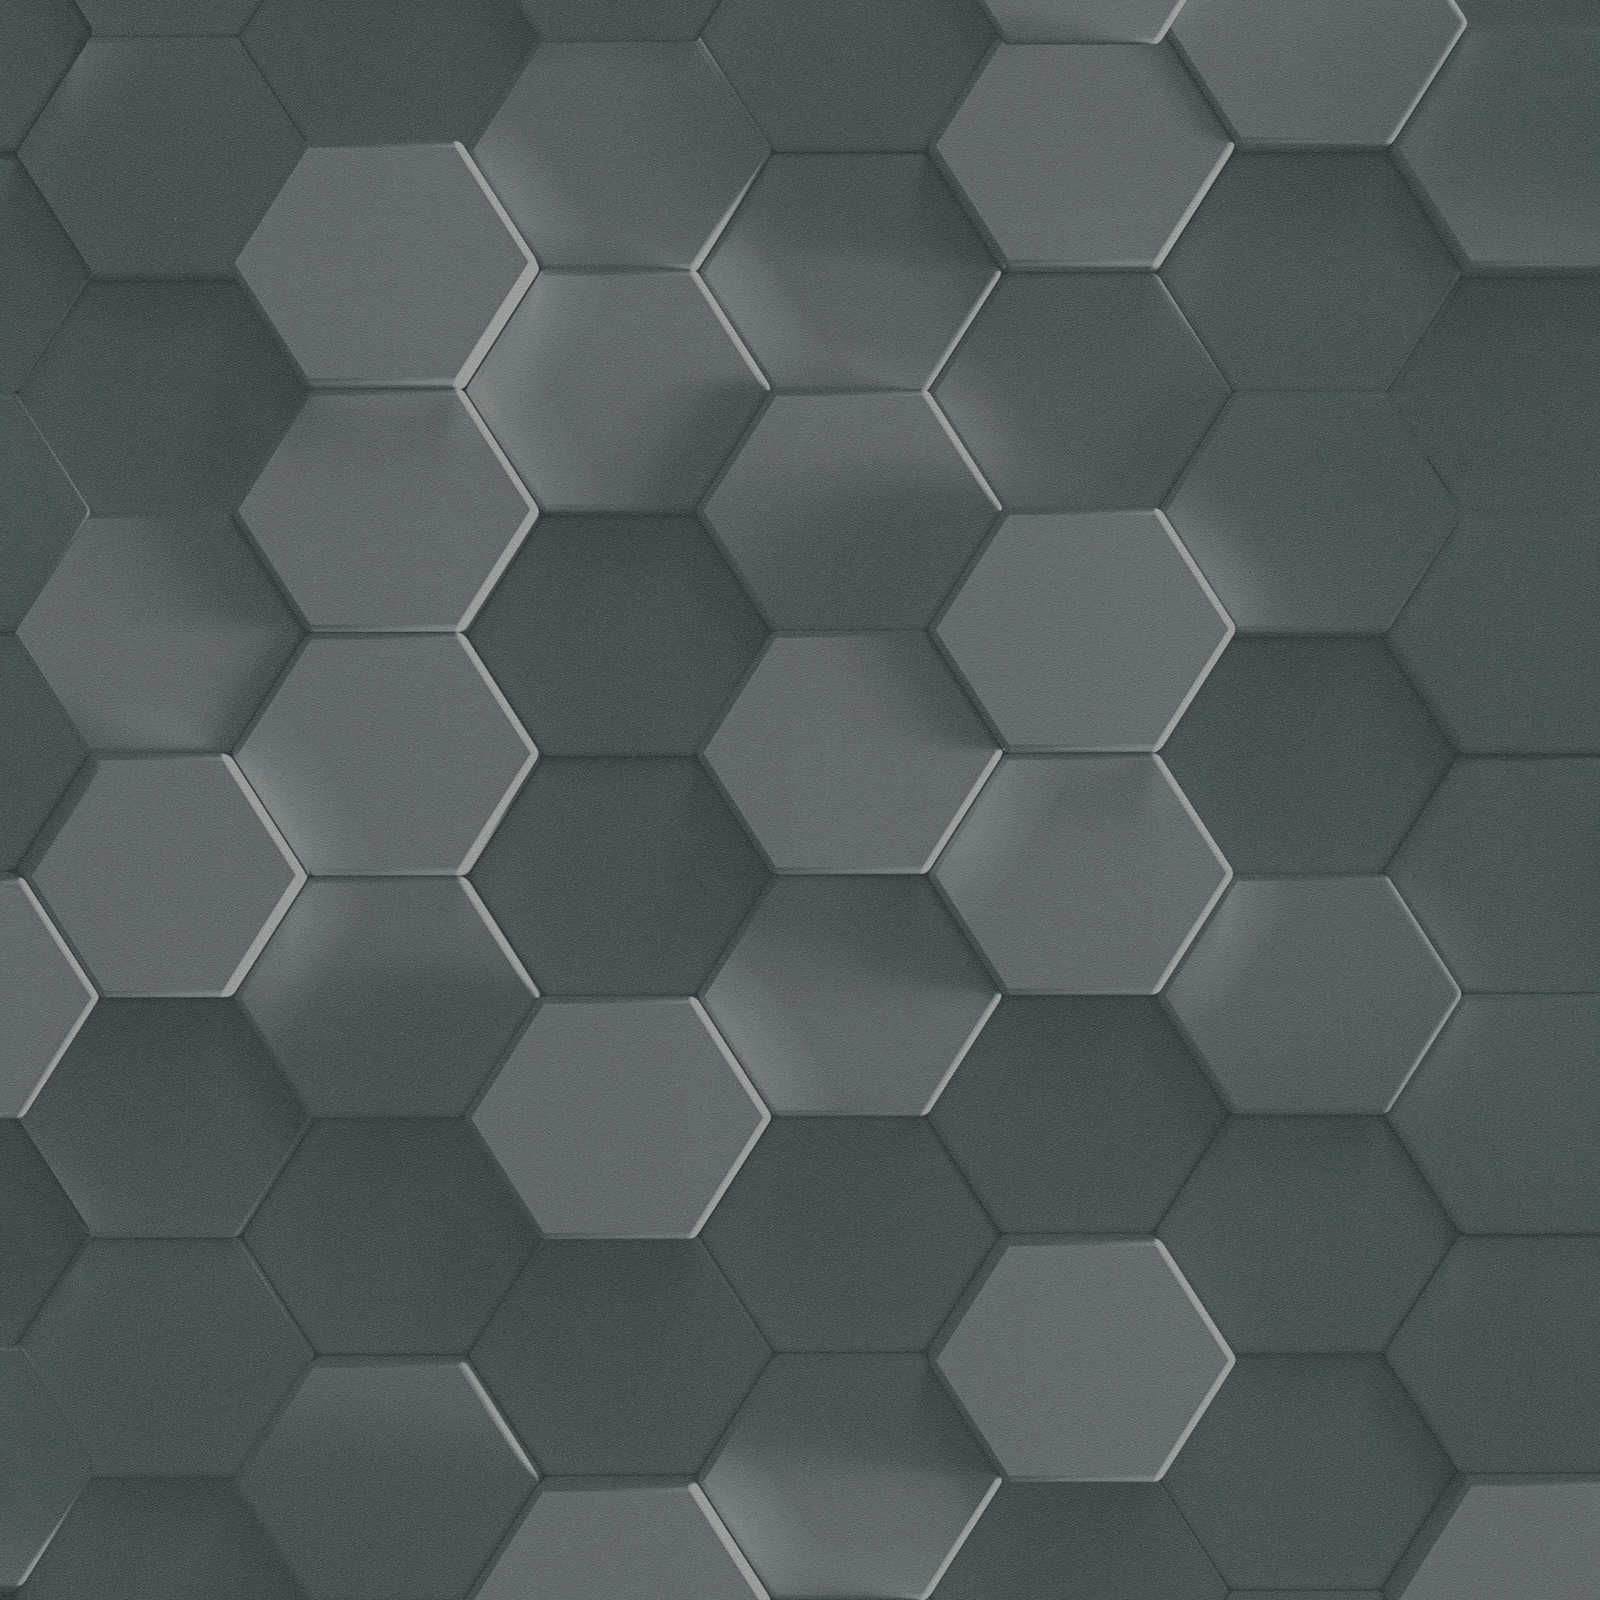             Hexagon 3D Tapete Grafikmuster Waben – Grau, Schwarz
        